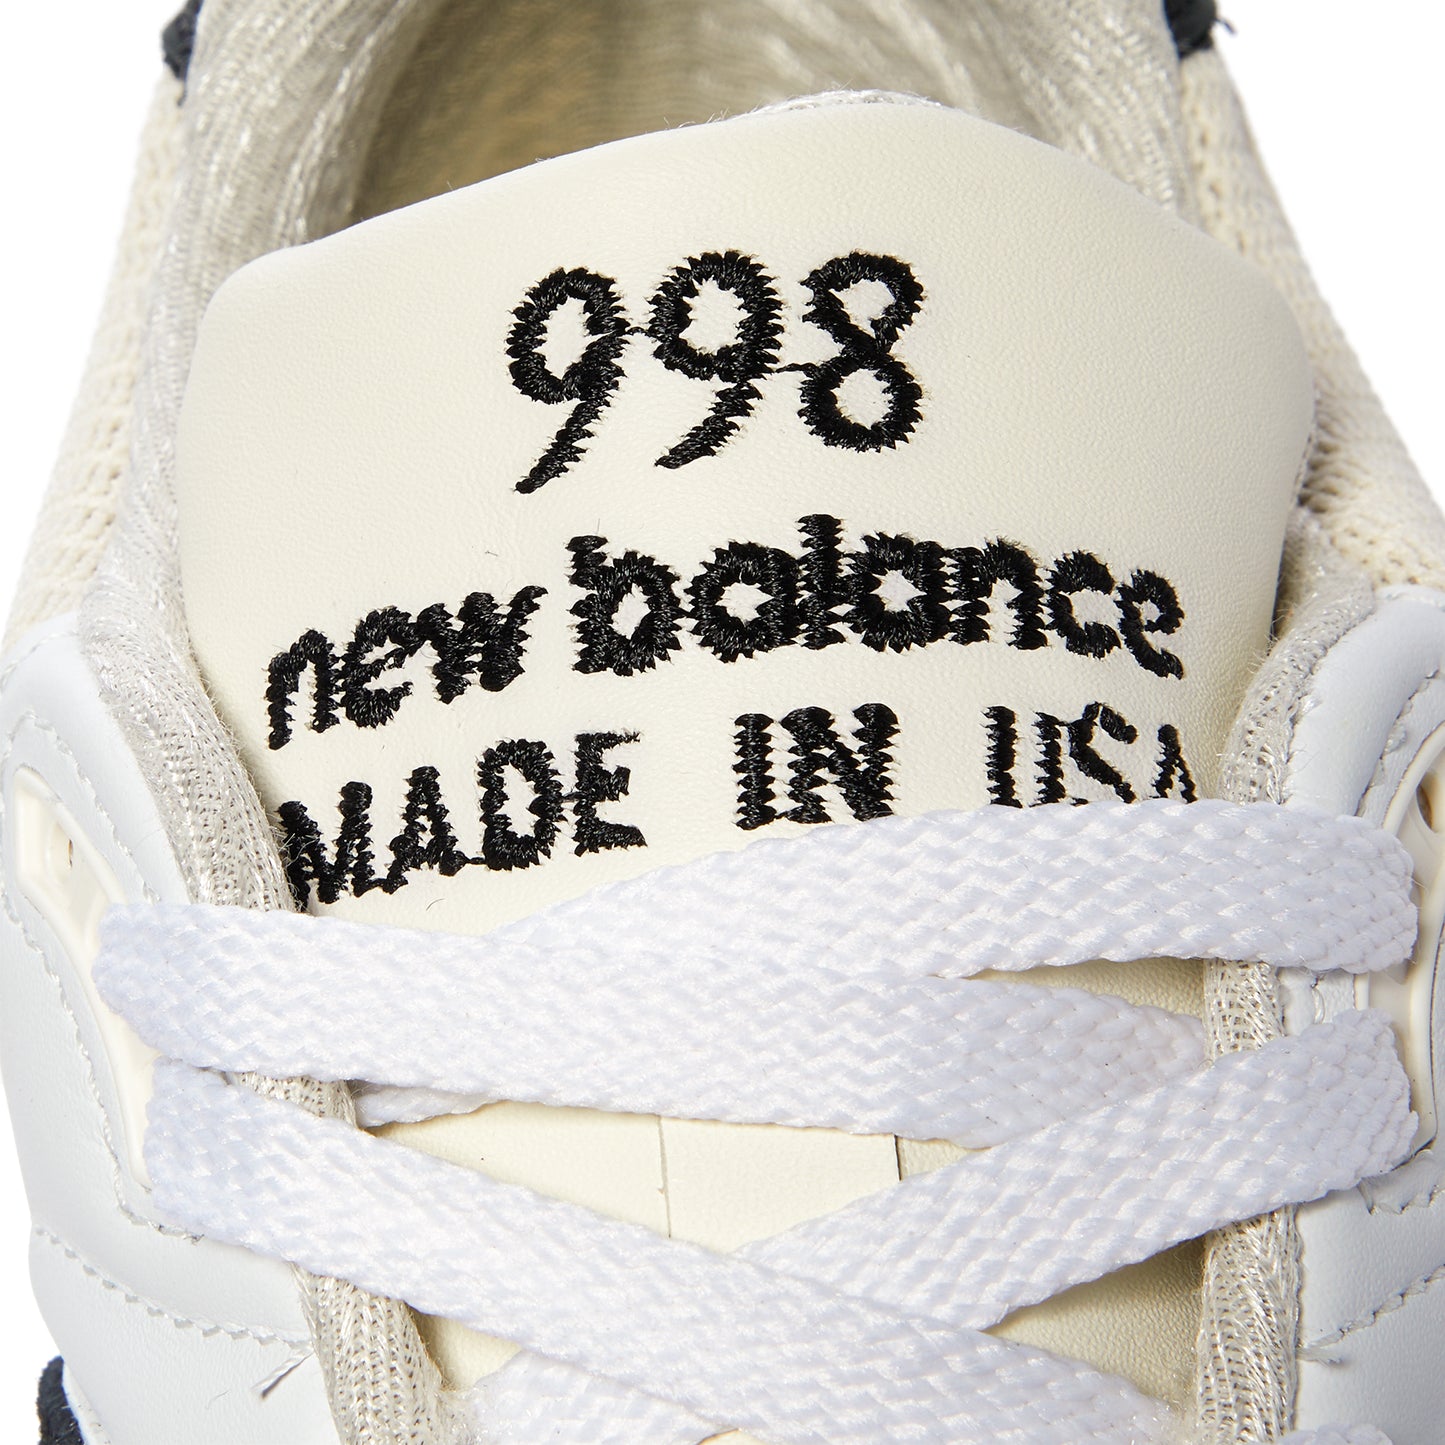 New Balance 998 Made in USA (White/Black)